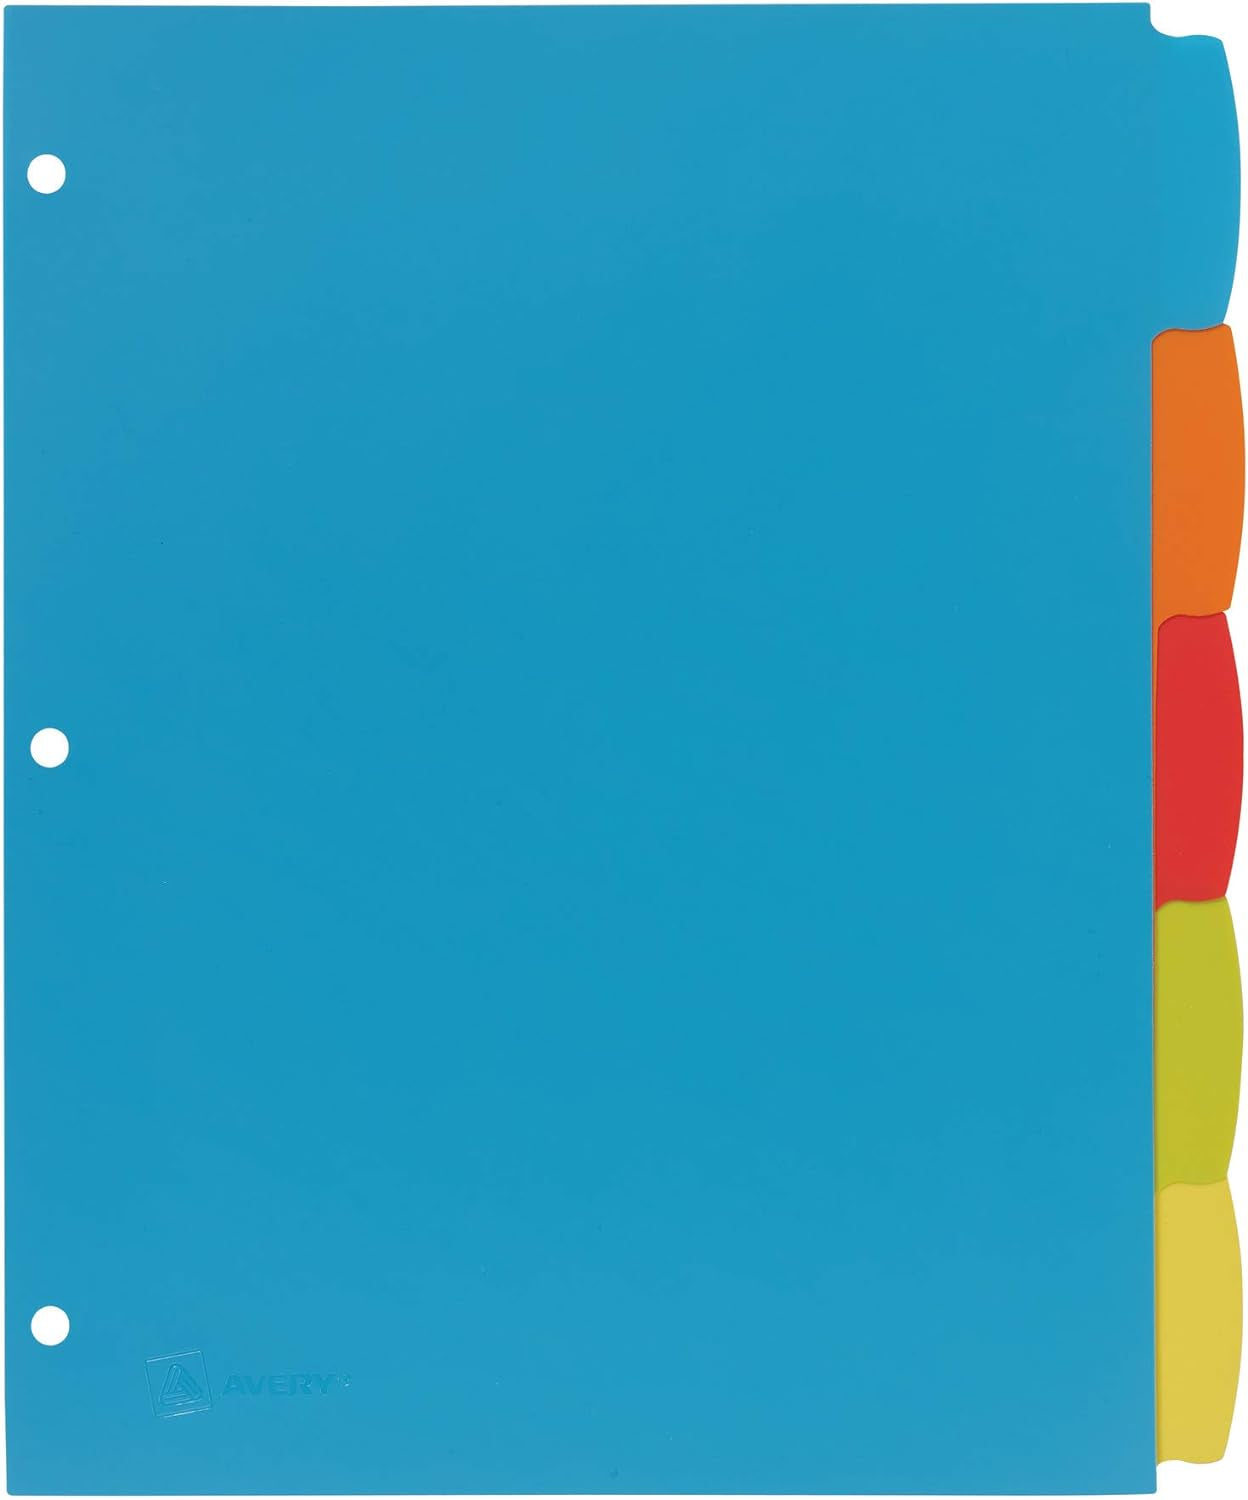 Big Tab Write & Erase Durable Plastic Dividers for 3 Ring Binders, 5-Tab Set, Bright Multicolor, 1 Set (16129)